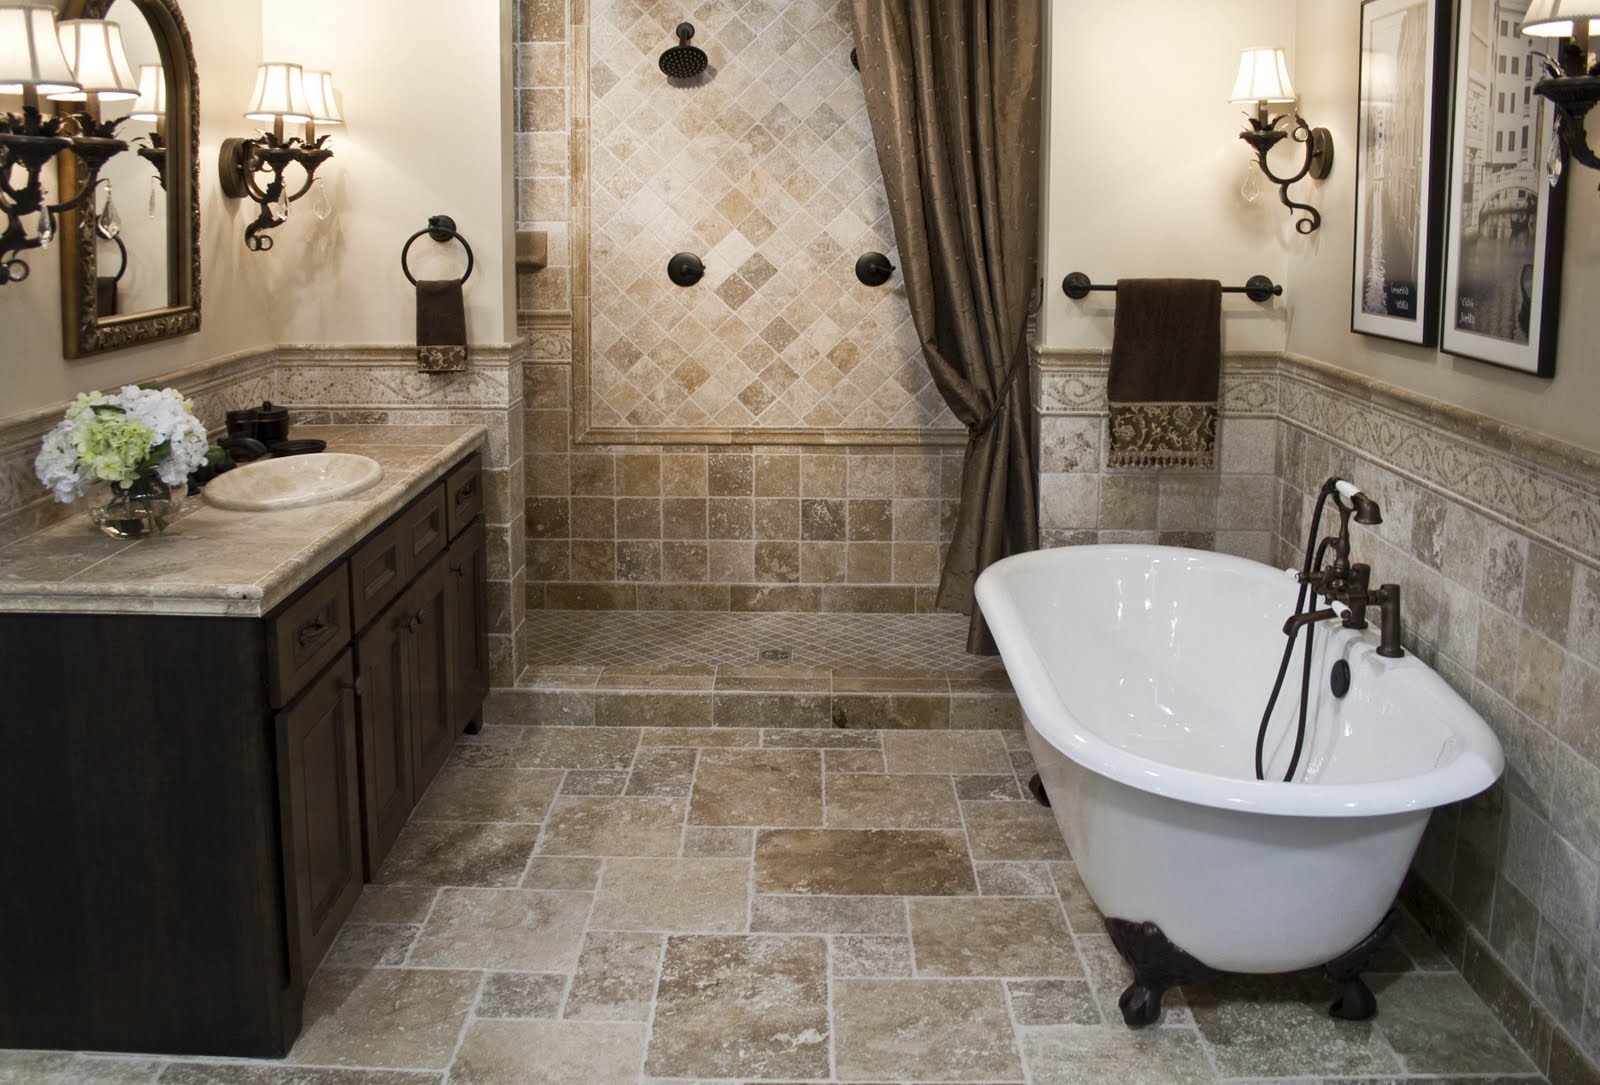 The Top 20 Small Bathroom Design Ideas for 2014 - Qnud